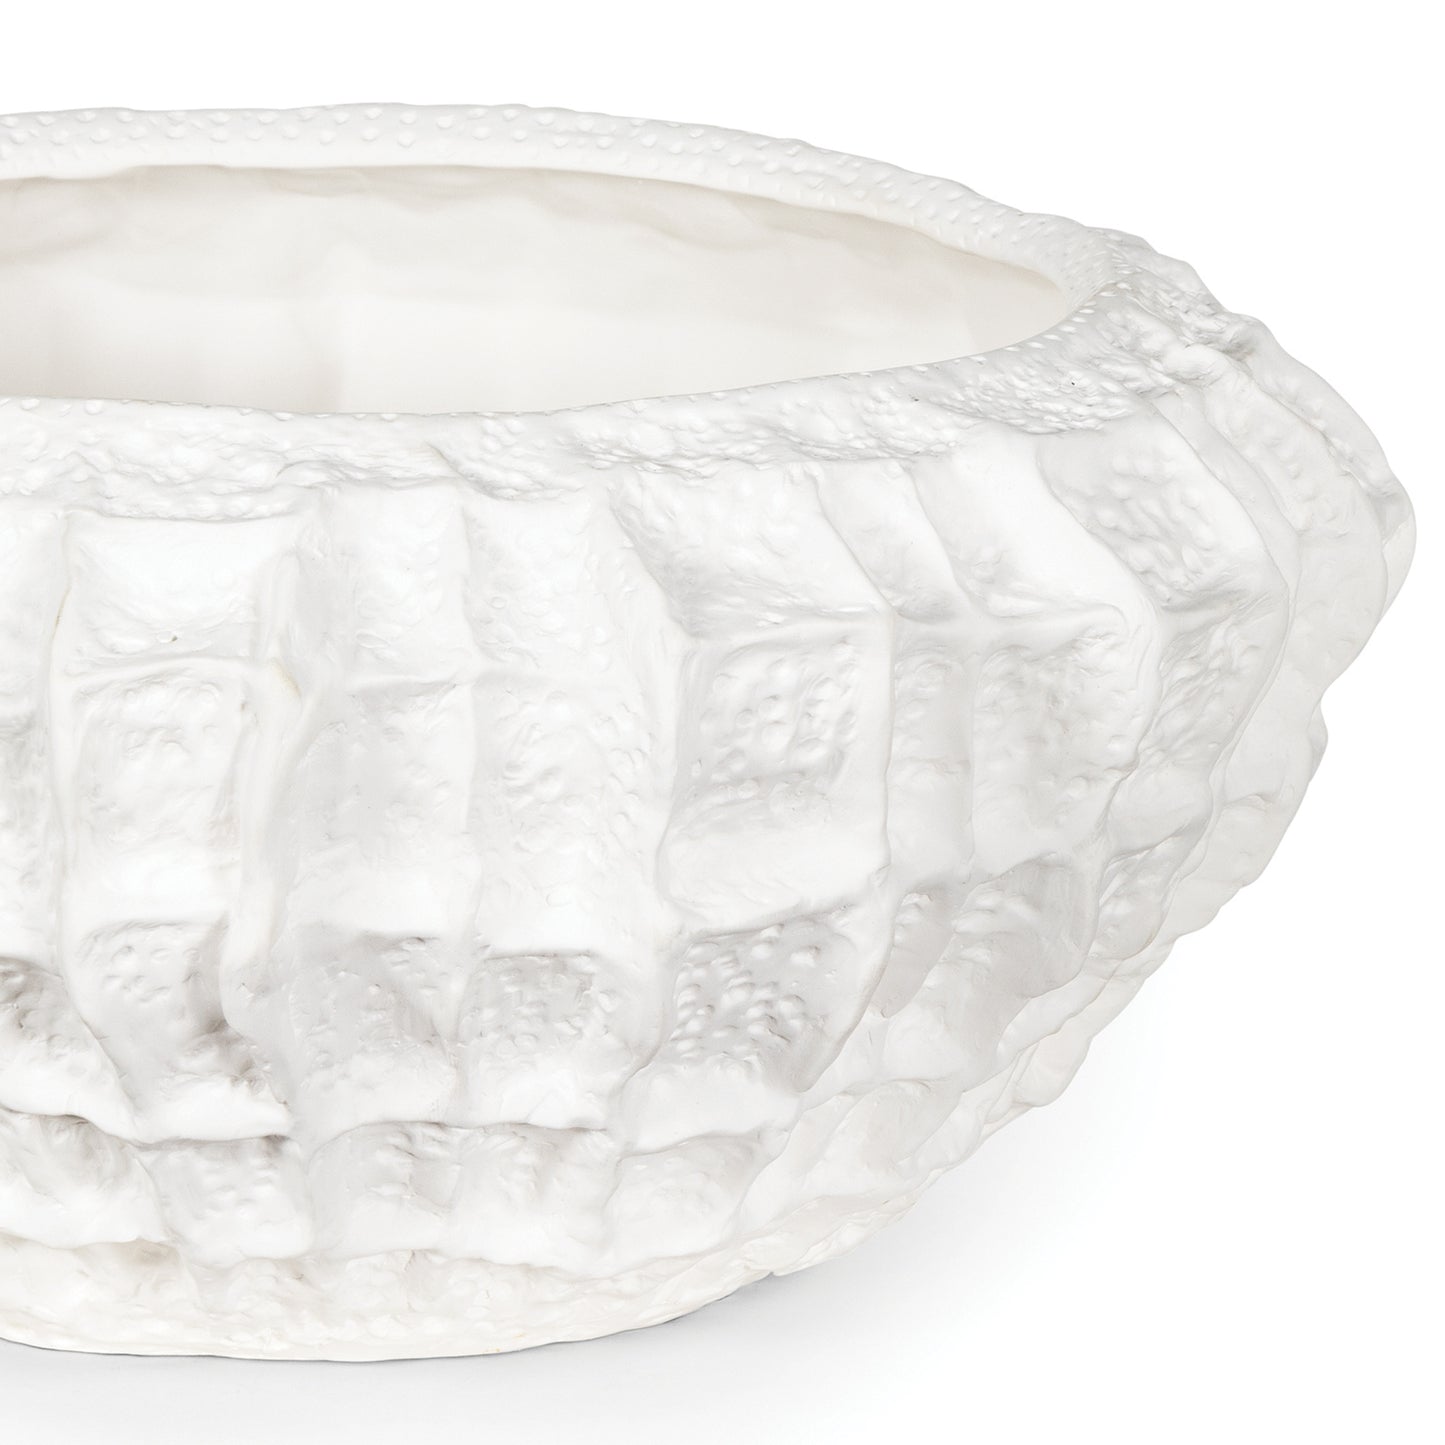 Caspian Ceramic Bowl in White by Regina Andrew